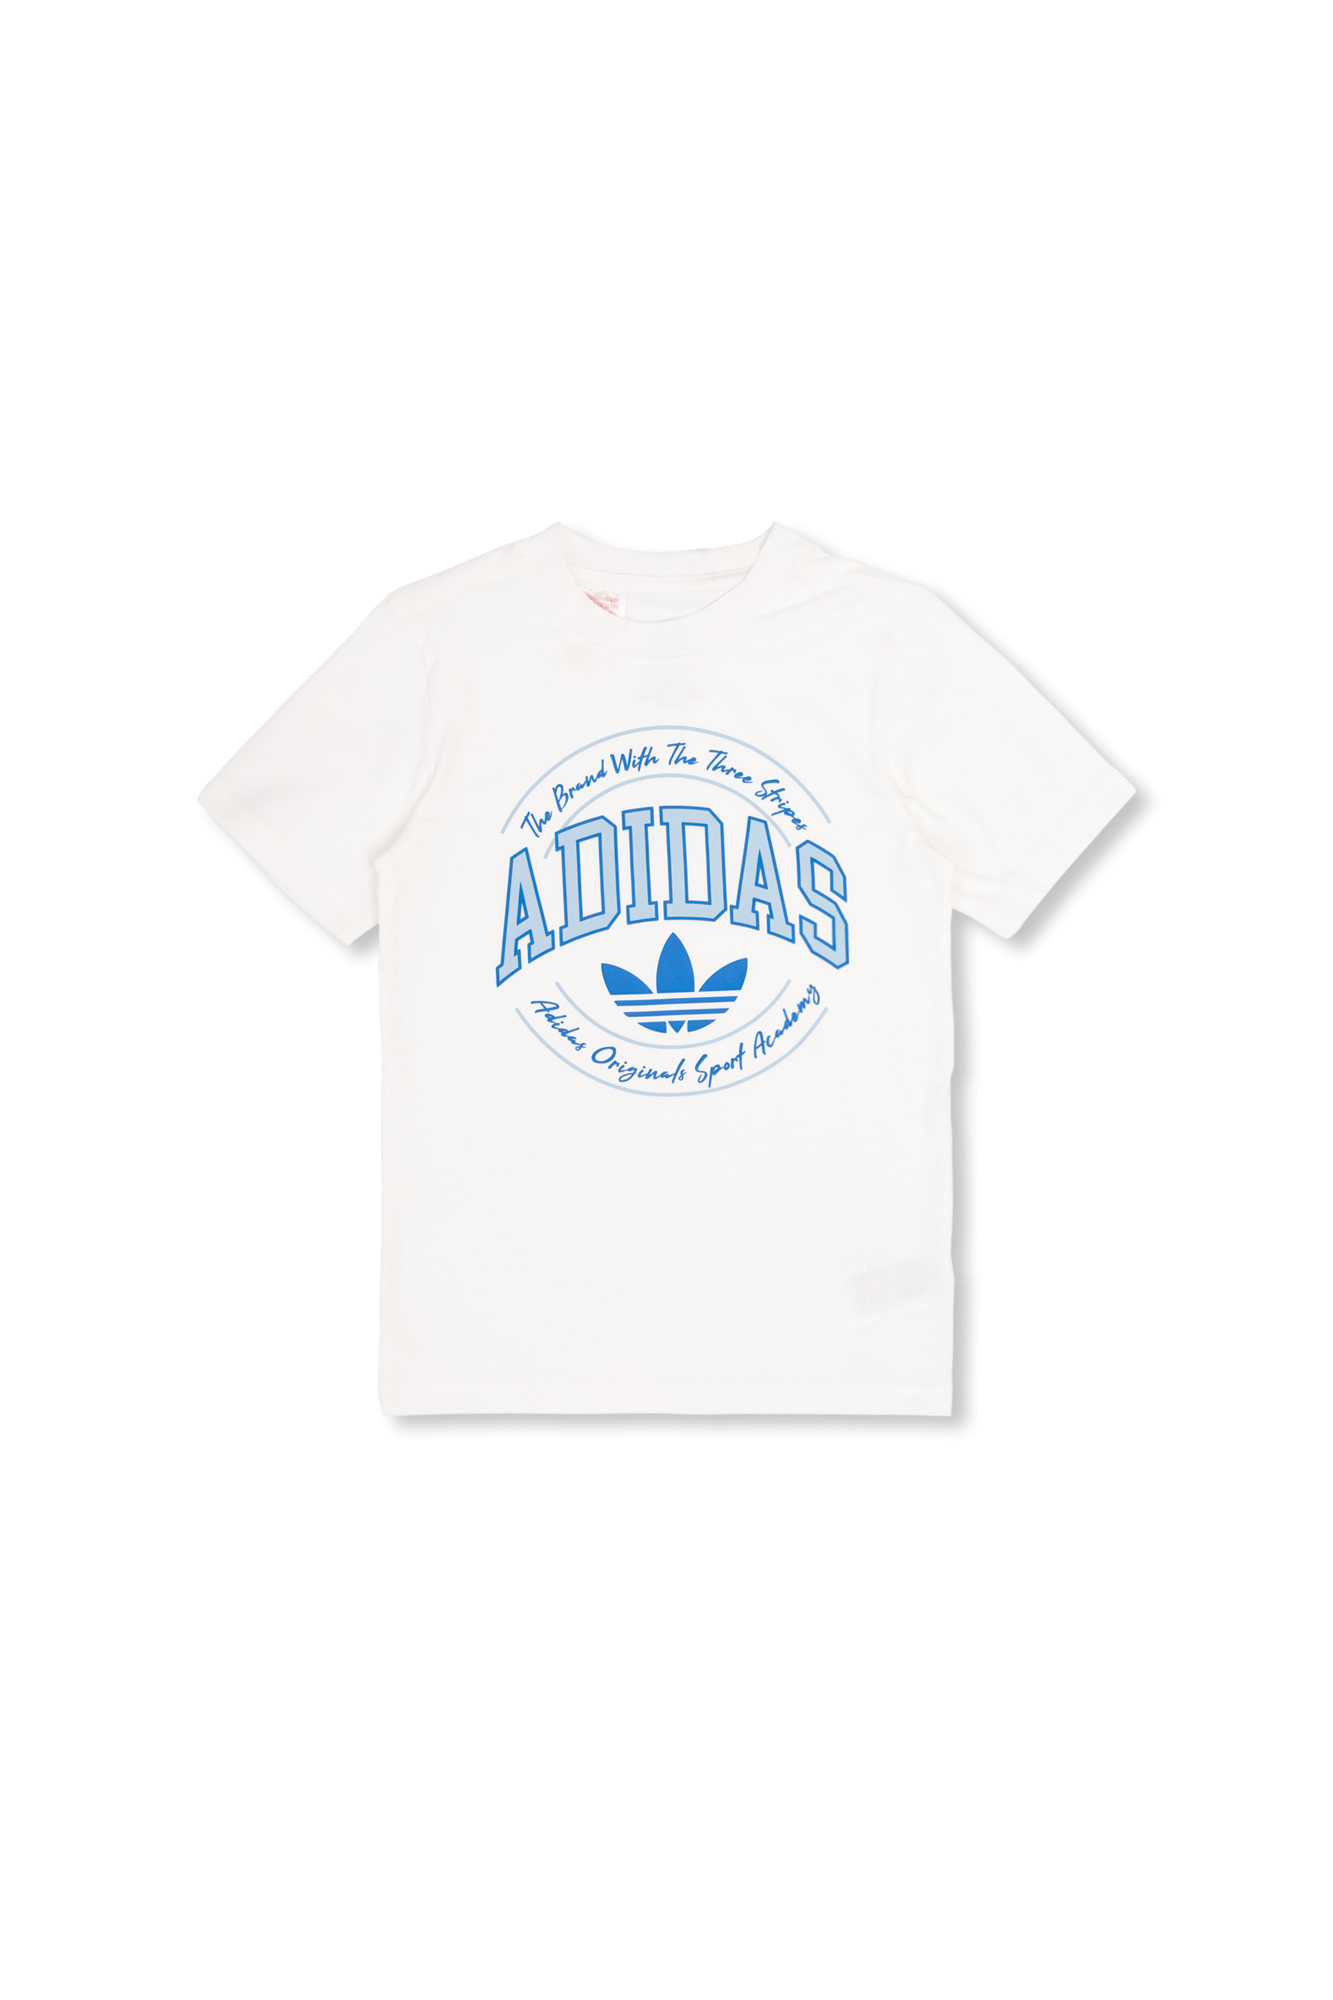 ADIDAS Kids T-shirt with logo